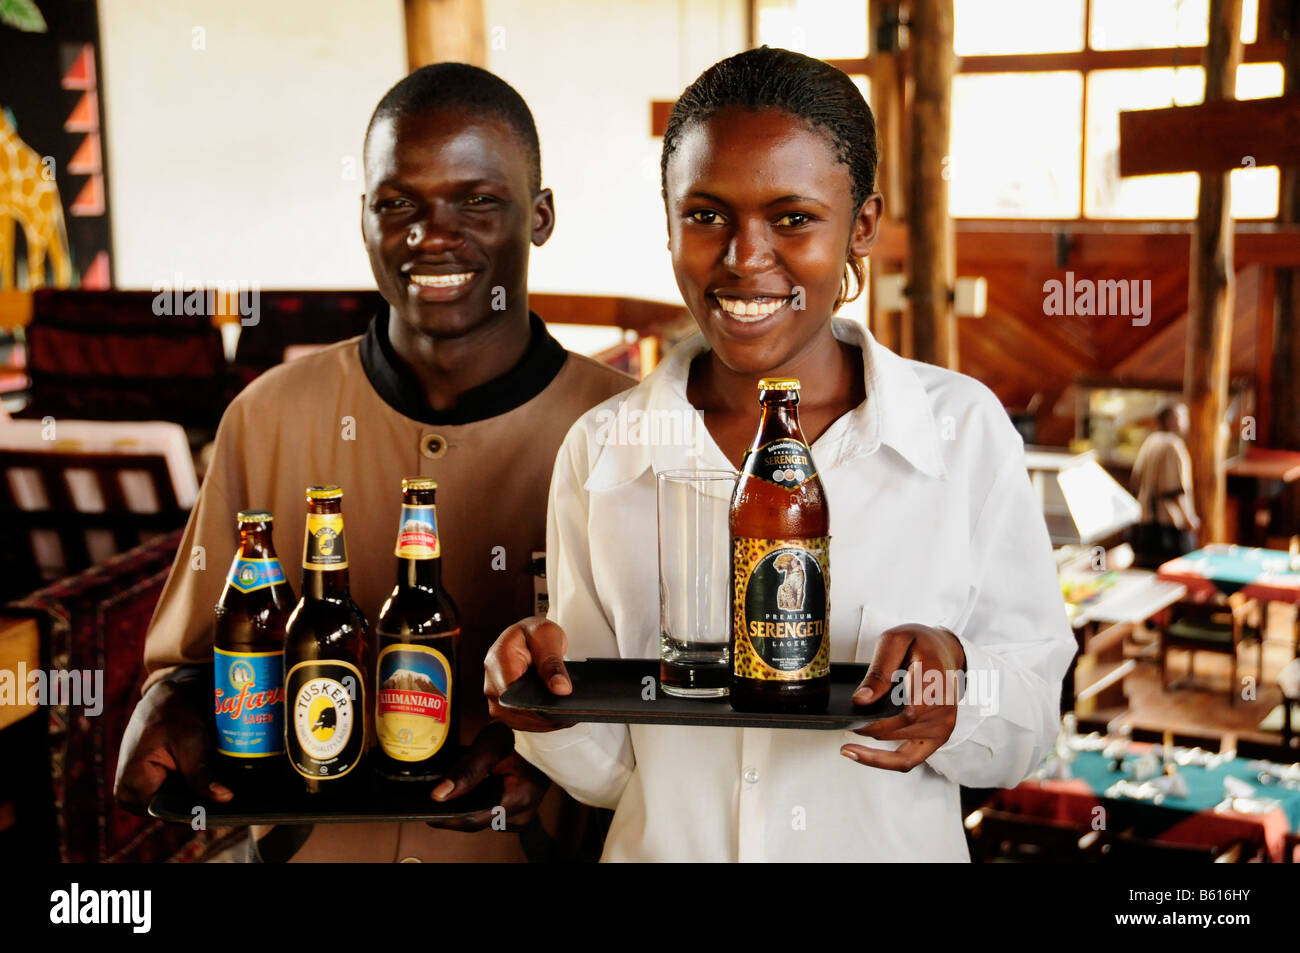 Waiter and waitress carrying the most popular beer brands in Tanzania, Serengeti, Kilimanjaro, Safari and Tusker Stock Photo